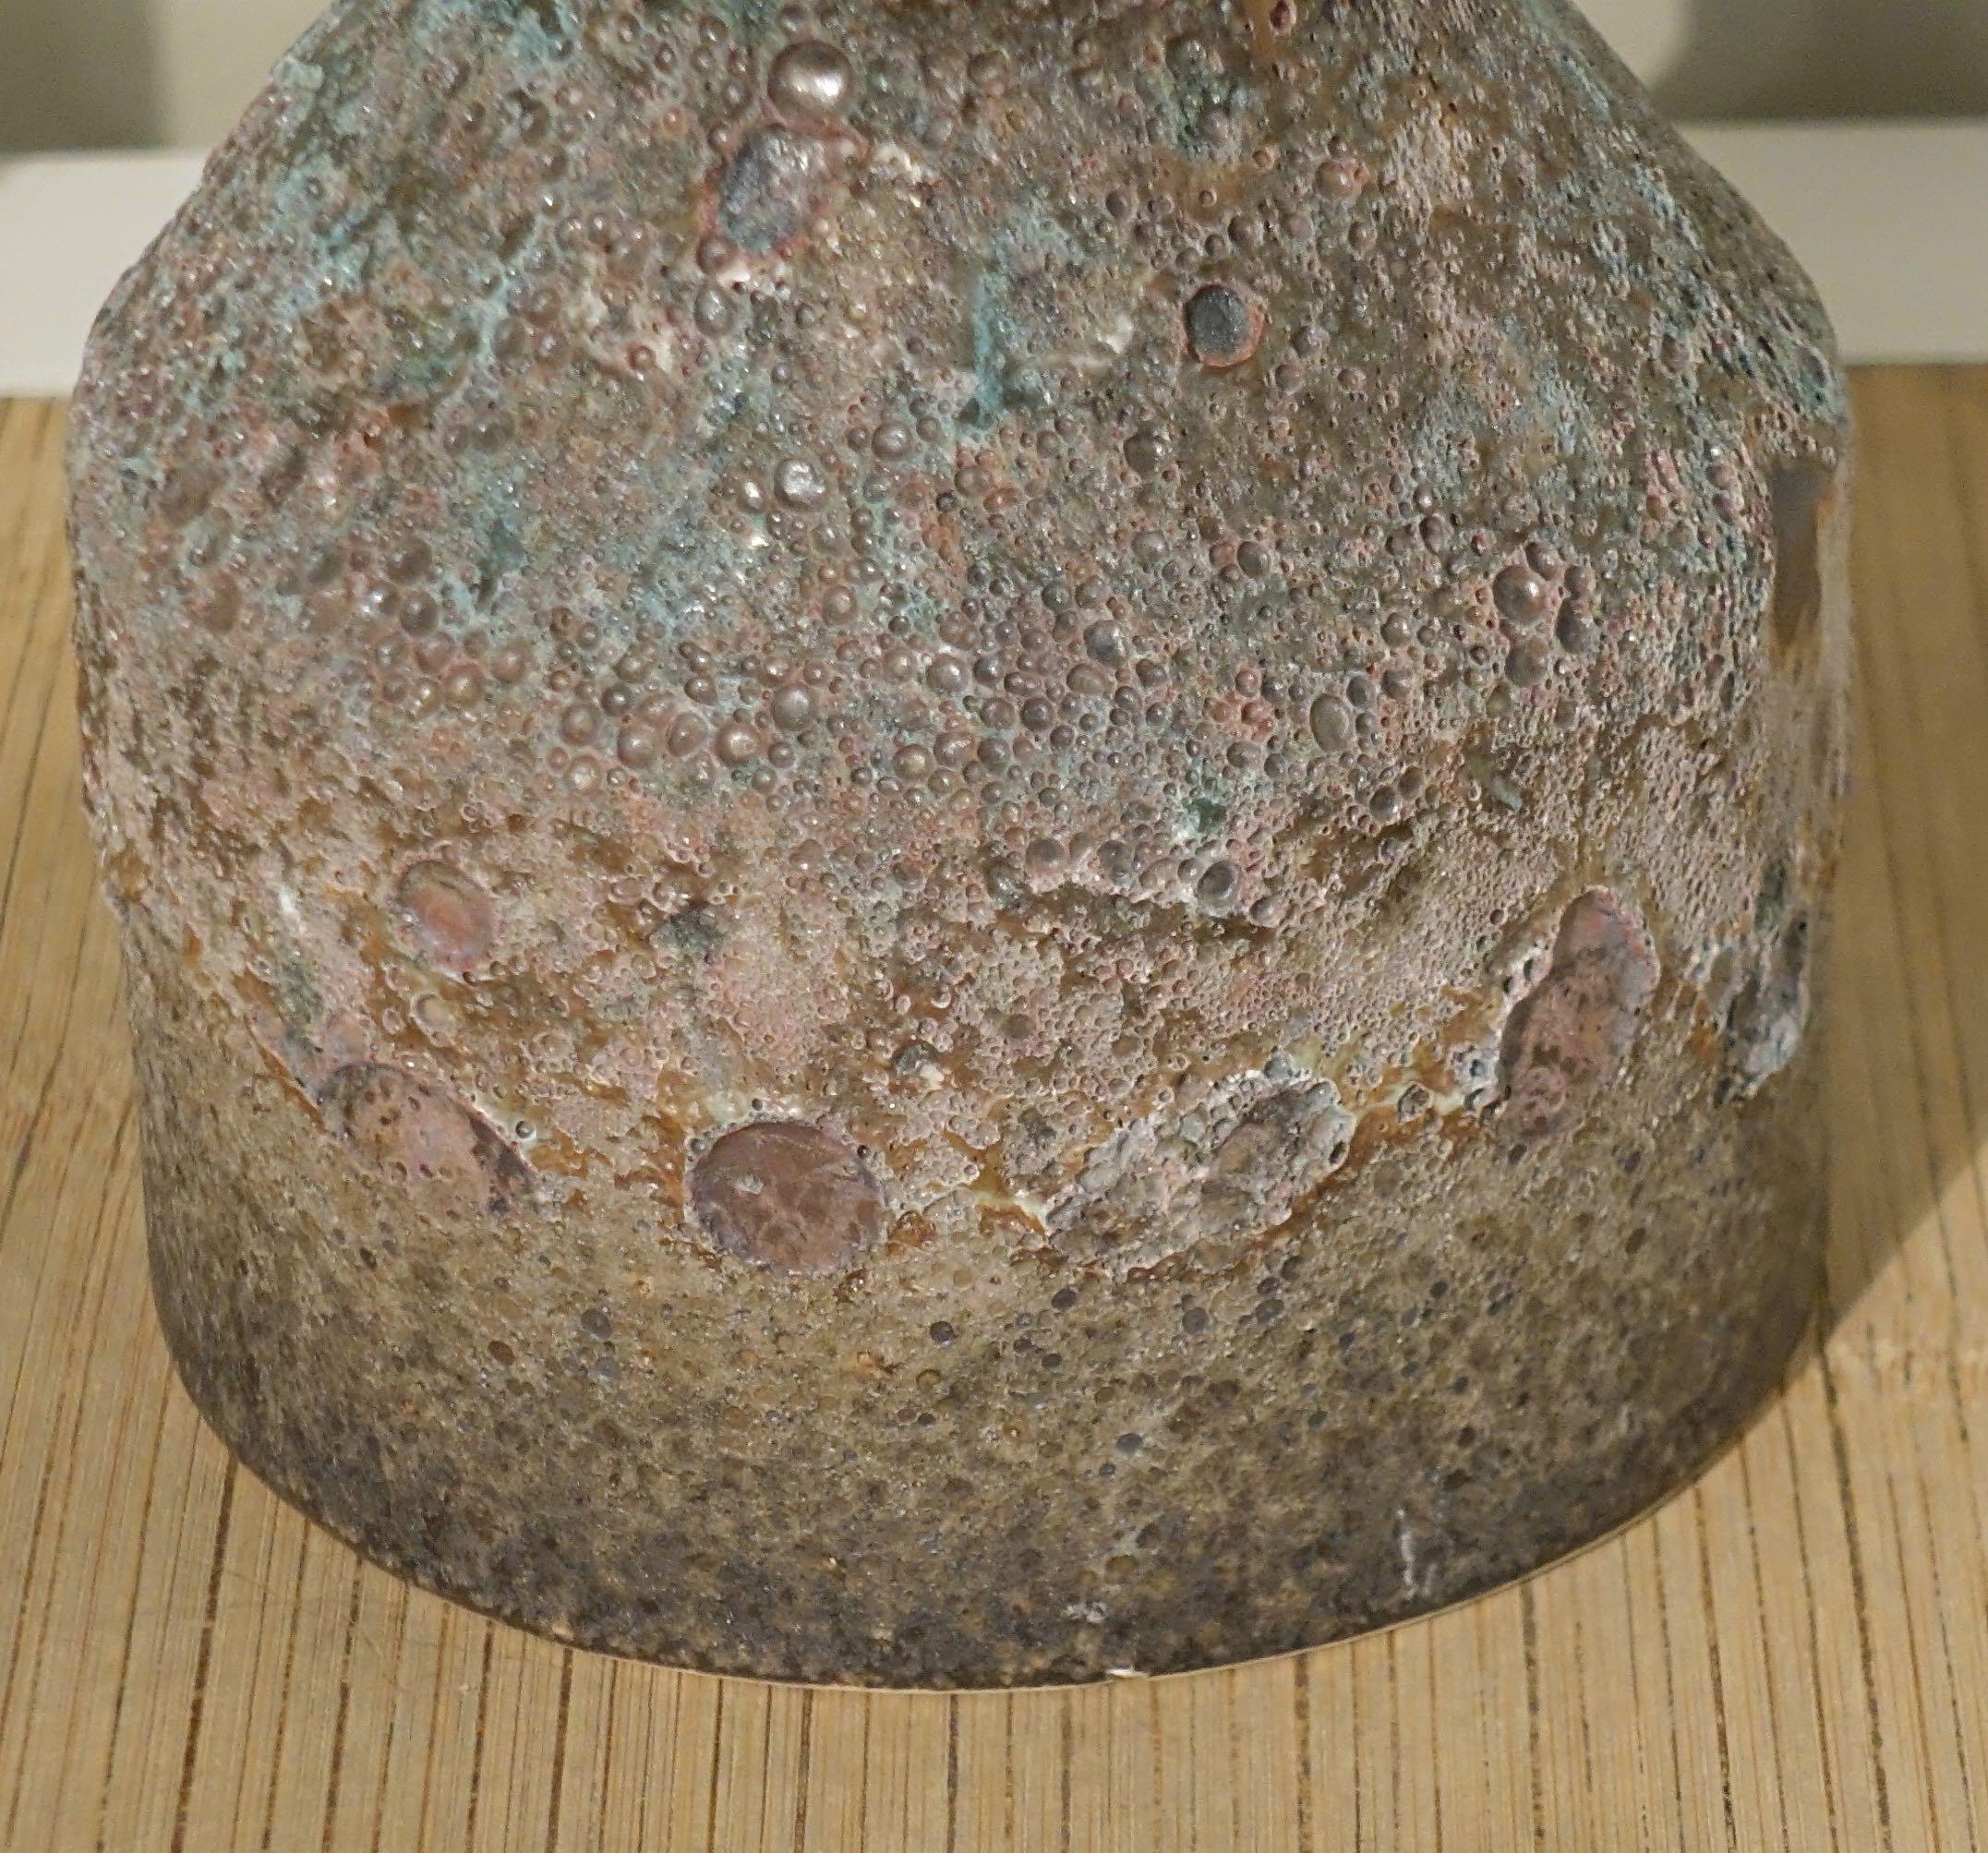 Chinese Volcanic Glaze Vase, Contemporary, China